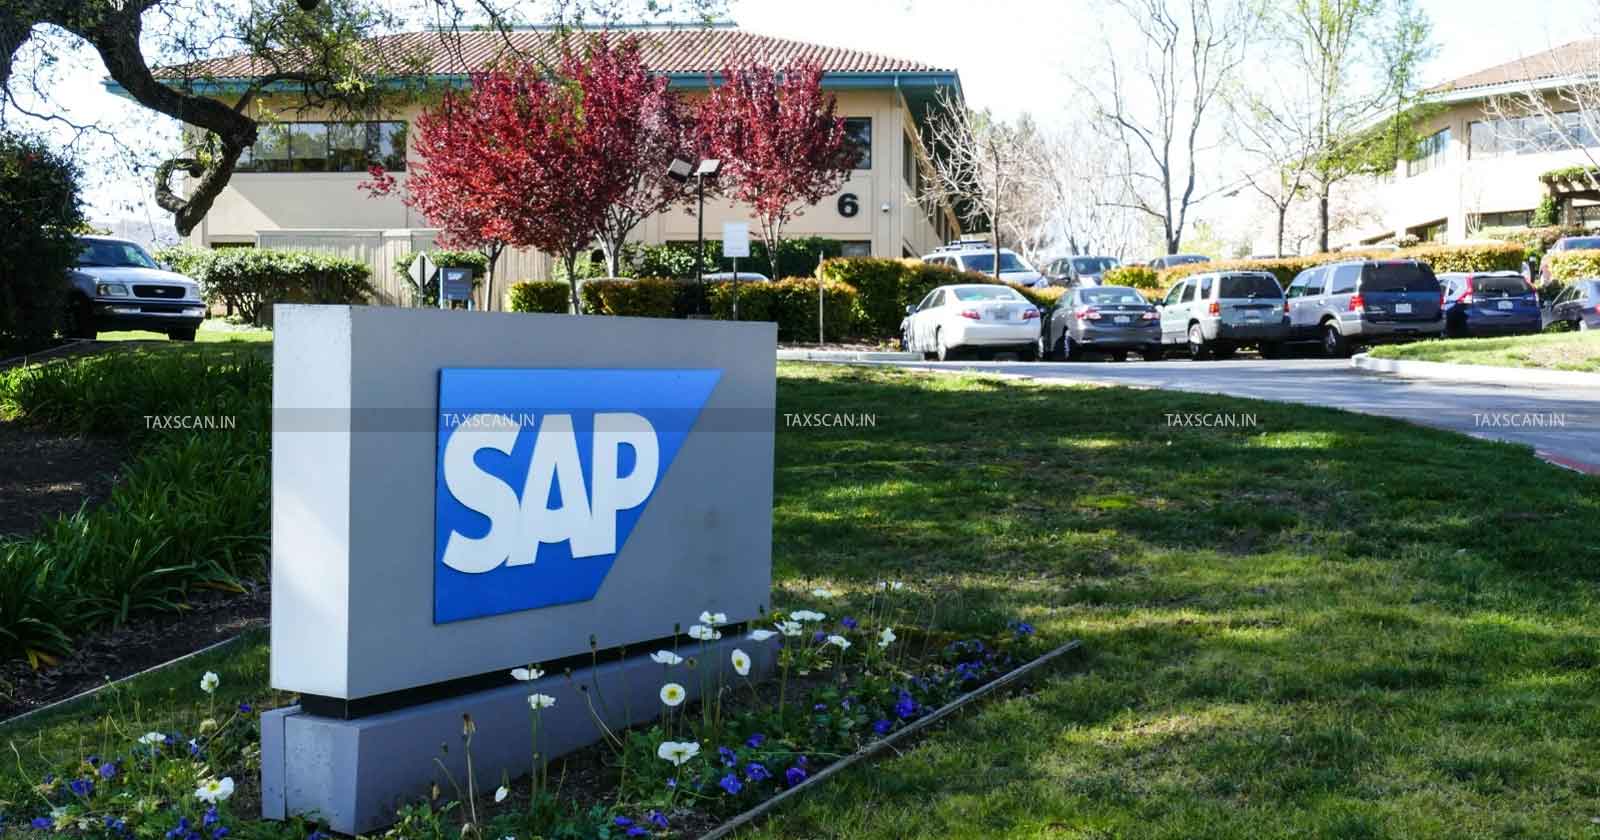 CA - MBA - Vacancy - SAP - jobs - sap jobs - taxscan